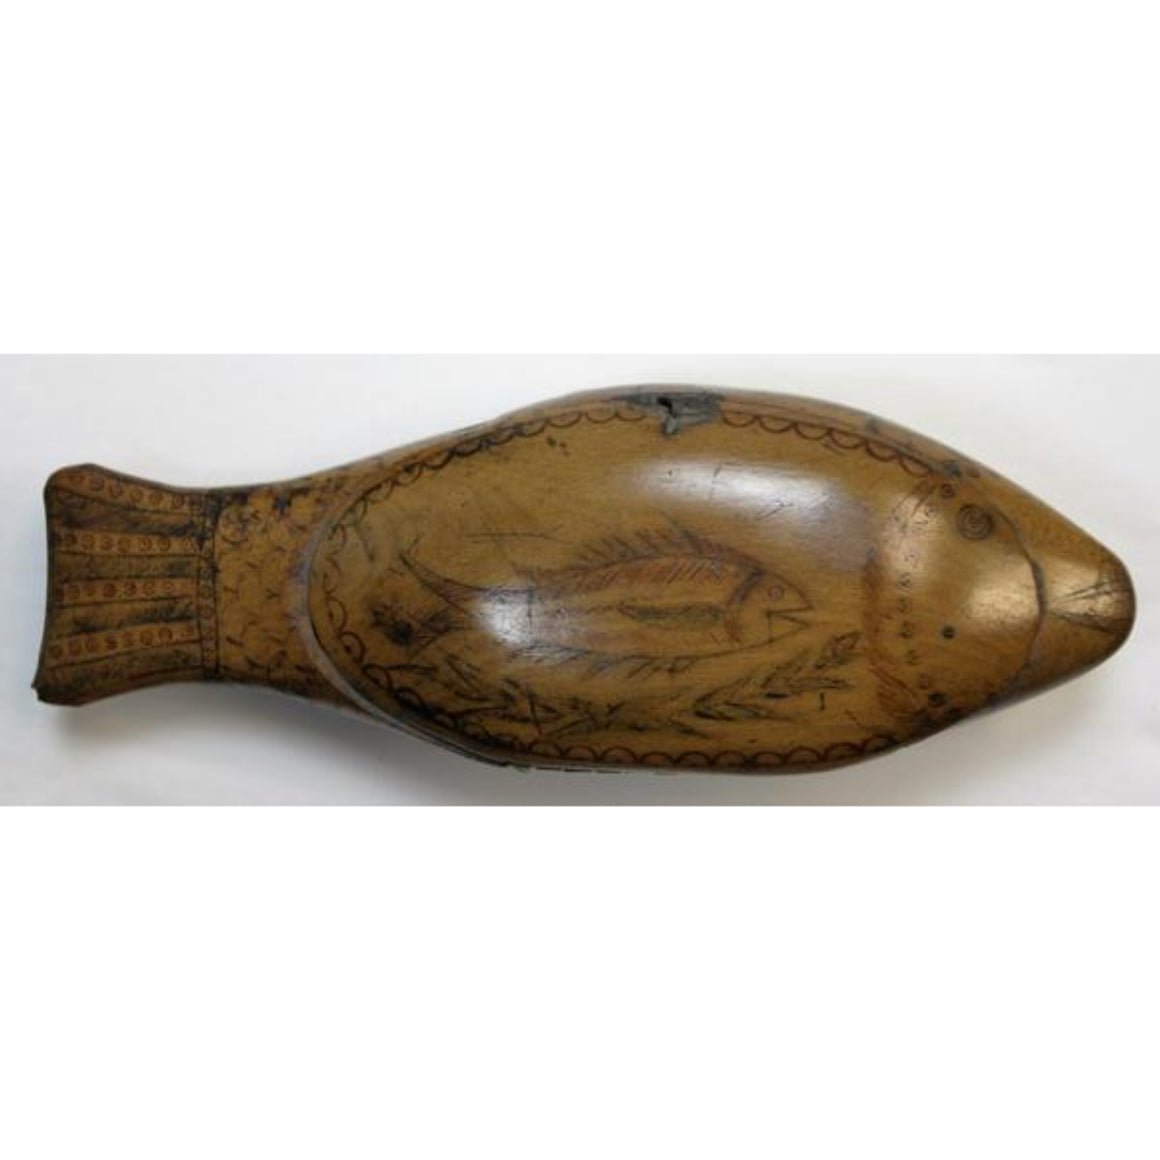 "Hand-Carved 19th C Fish Decoy Snuff Box"